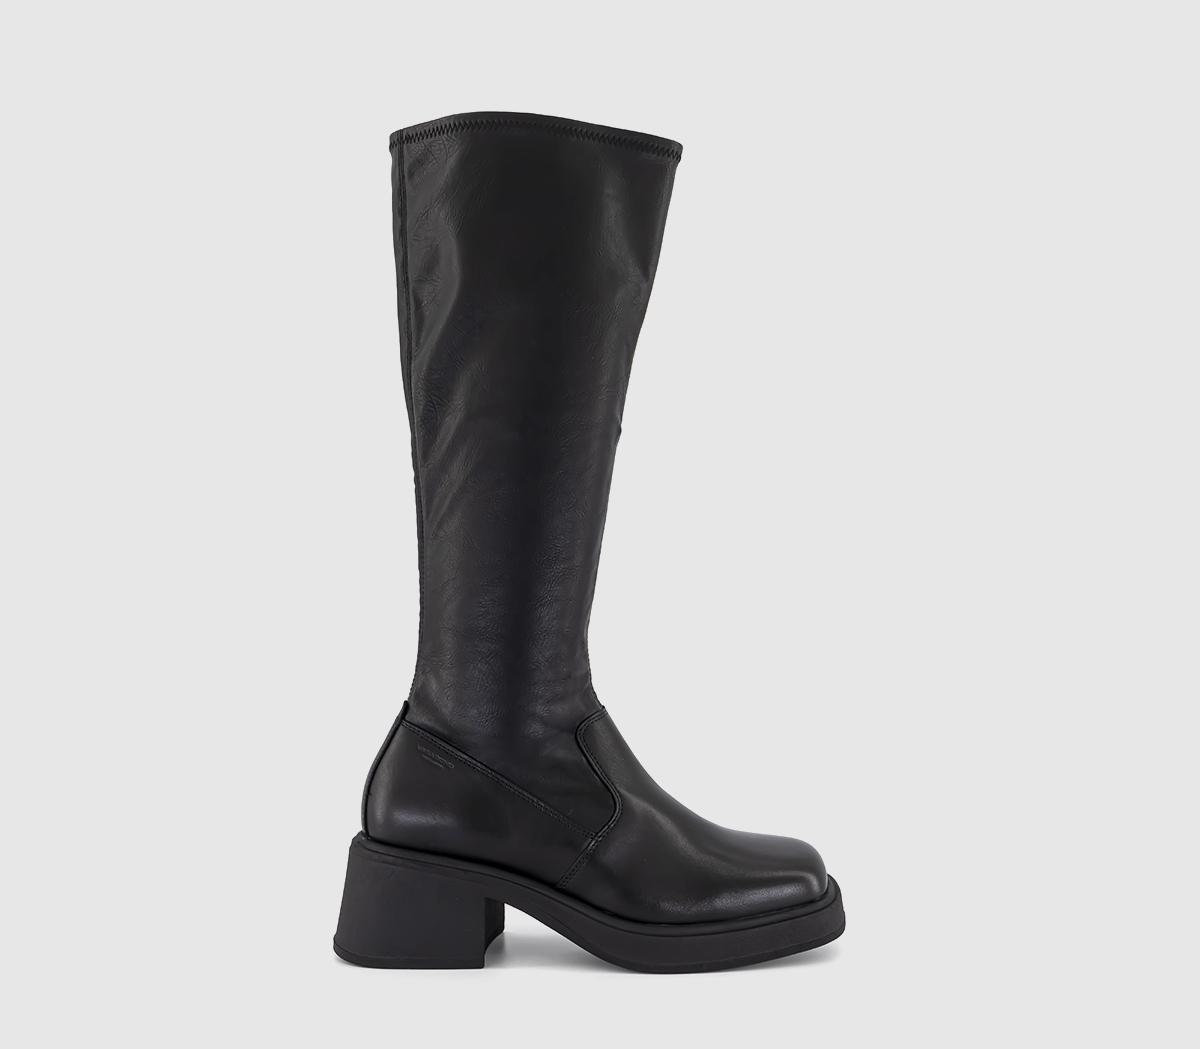 Vagabond Shoemakers Dorah Tall Boots Black - Women's Ankle Boots